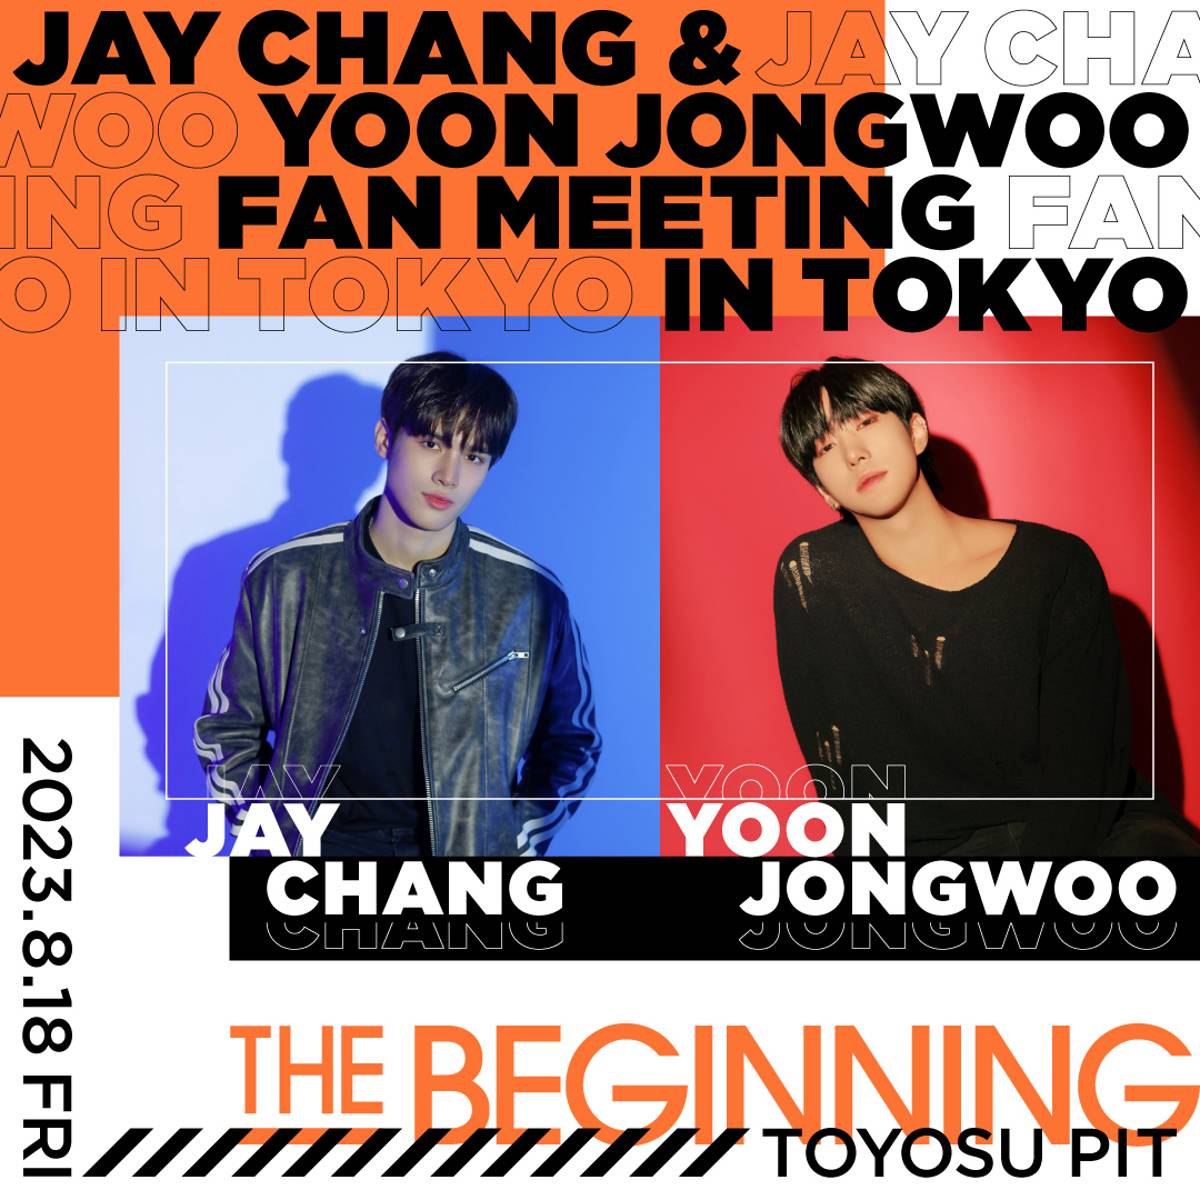 JAY CHANG & YOON JONG WOO FAN MEETING IN TOKYO「THE BEGINNIG」